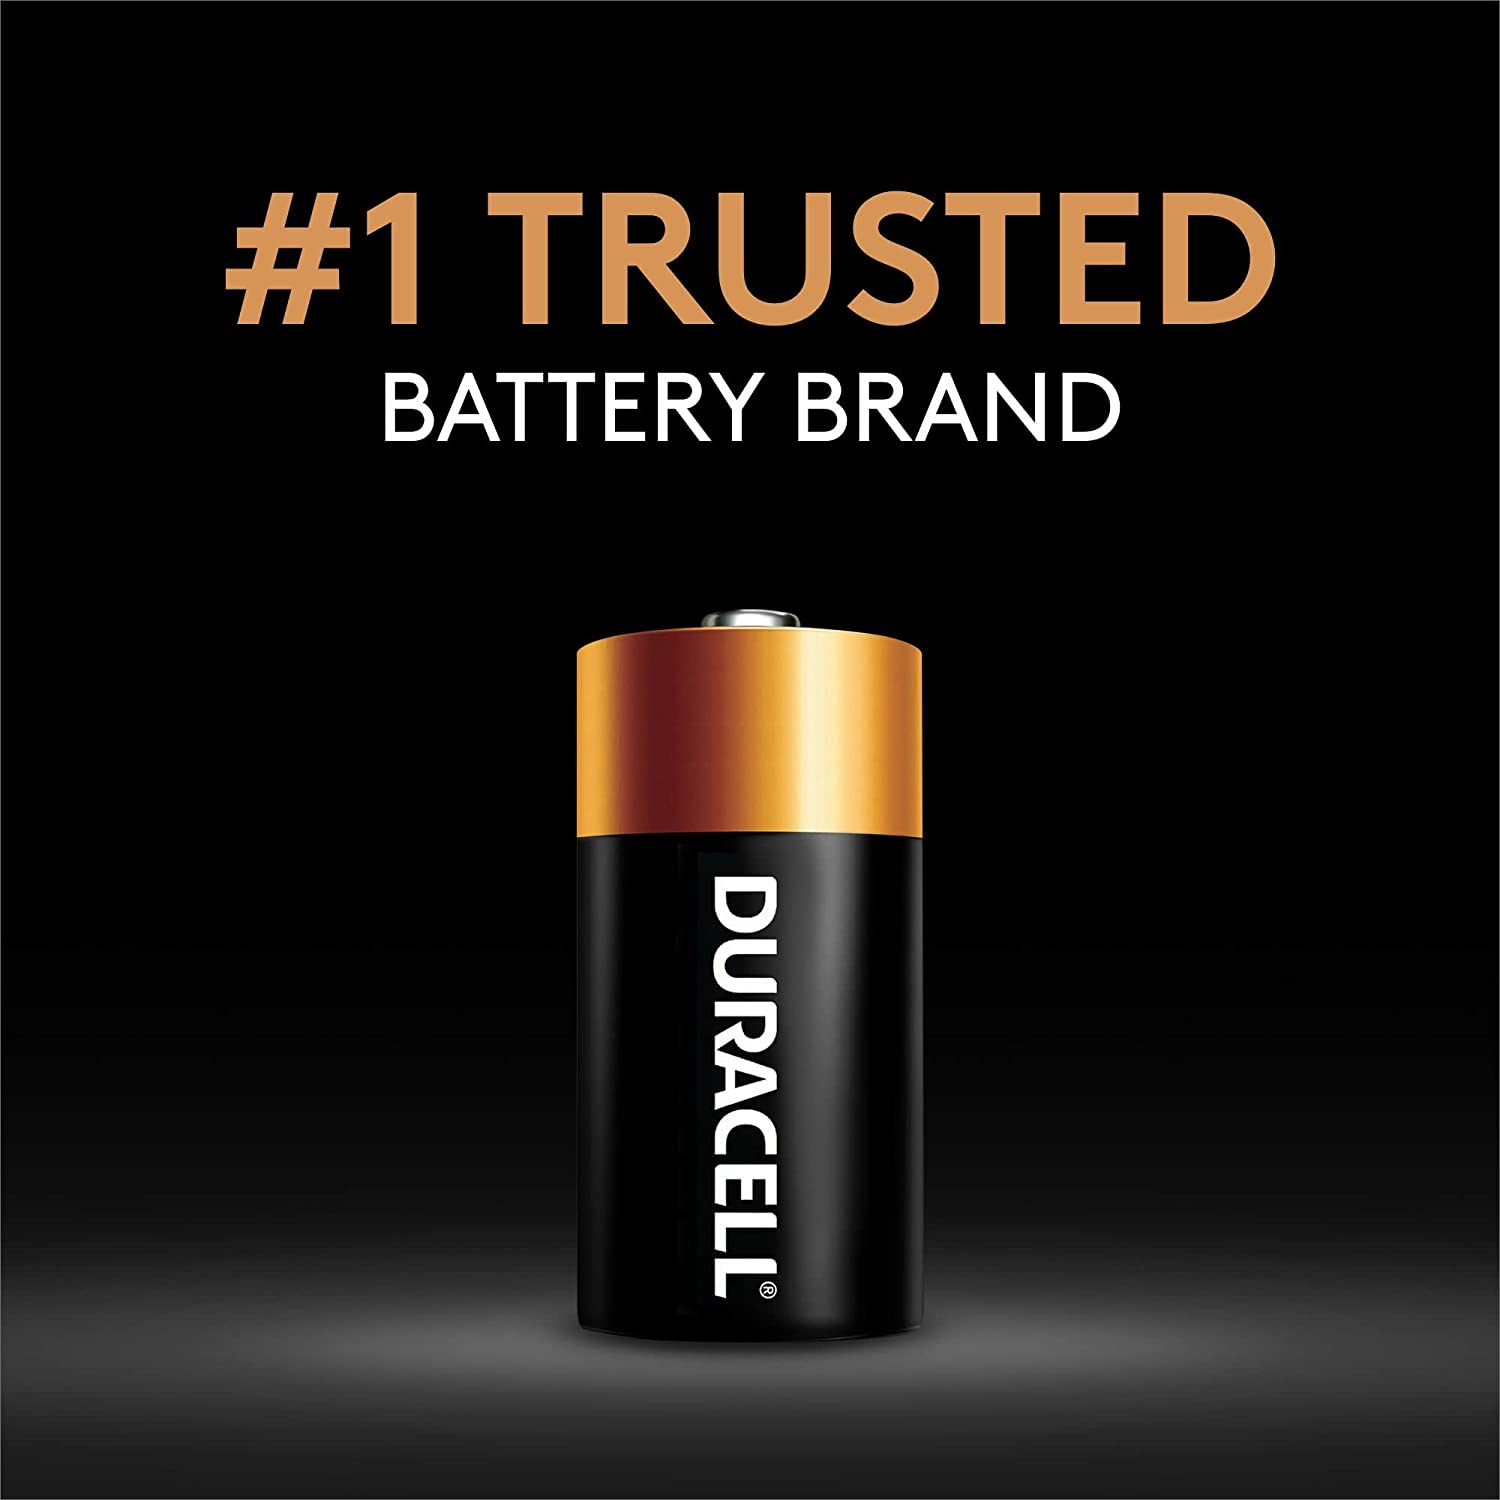 Duracell® Coppertop® Alkaline Batteries